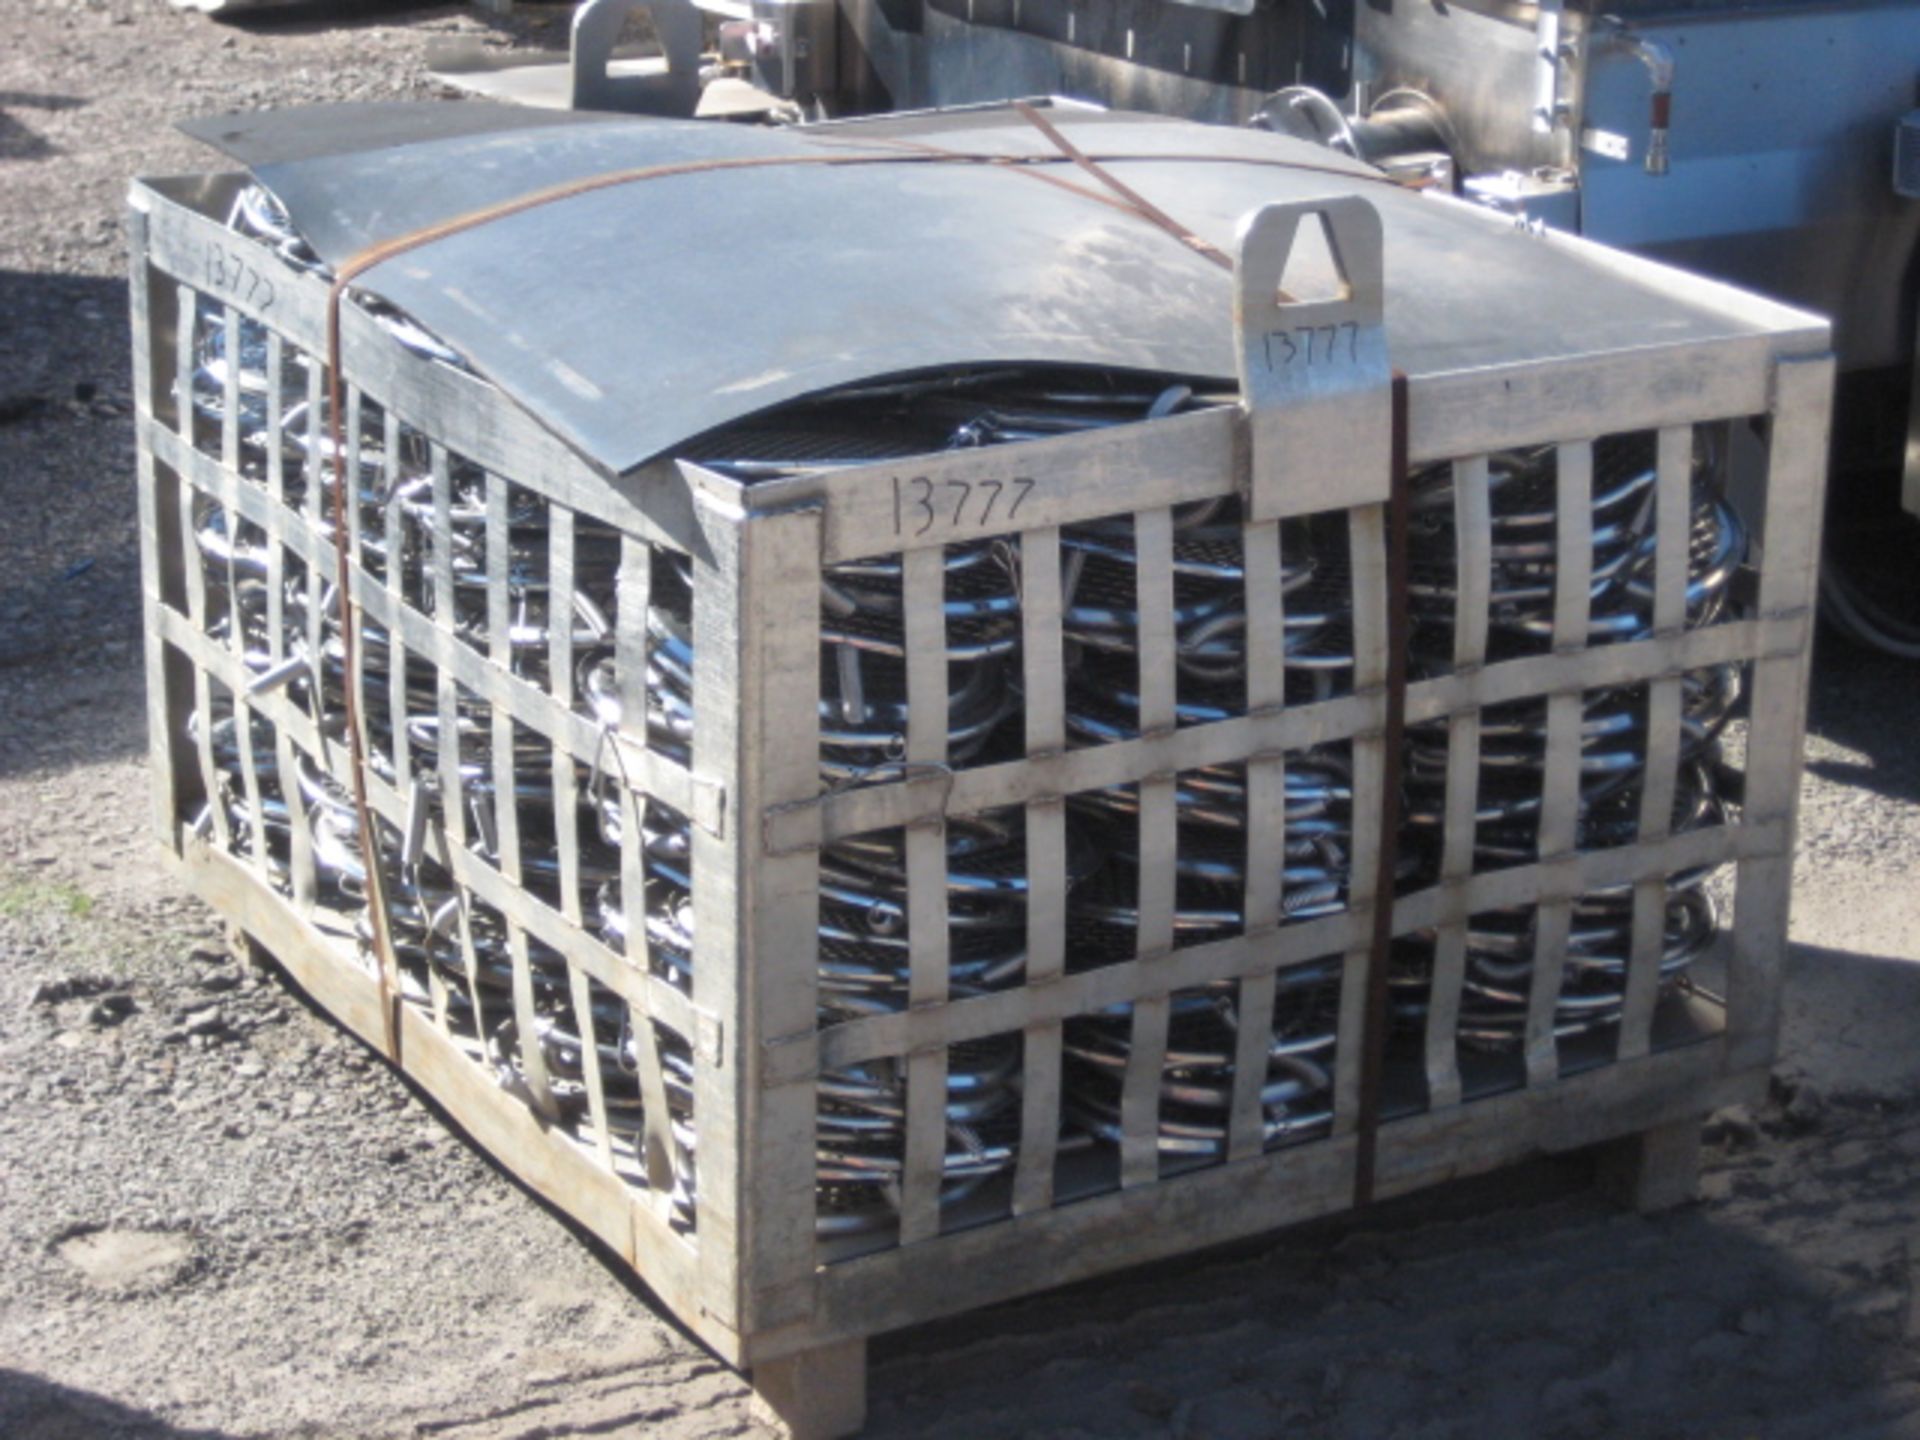 S/S slat basket of oval ham screens, 250 sq screens are 11.5"W by 13.25"L.